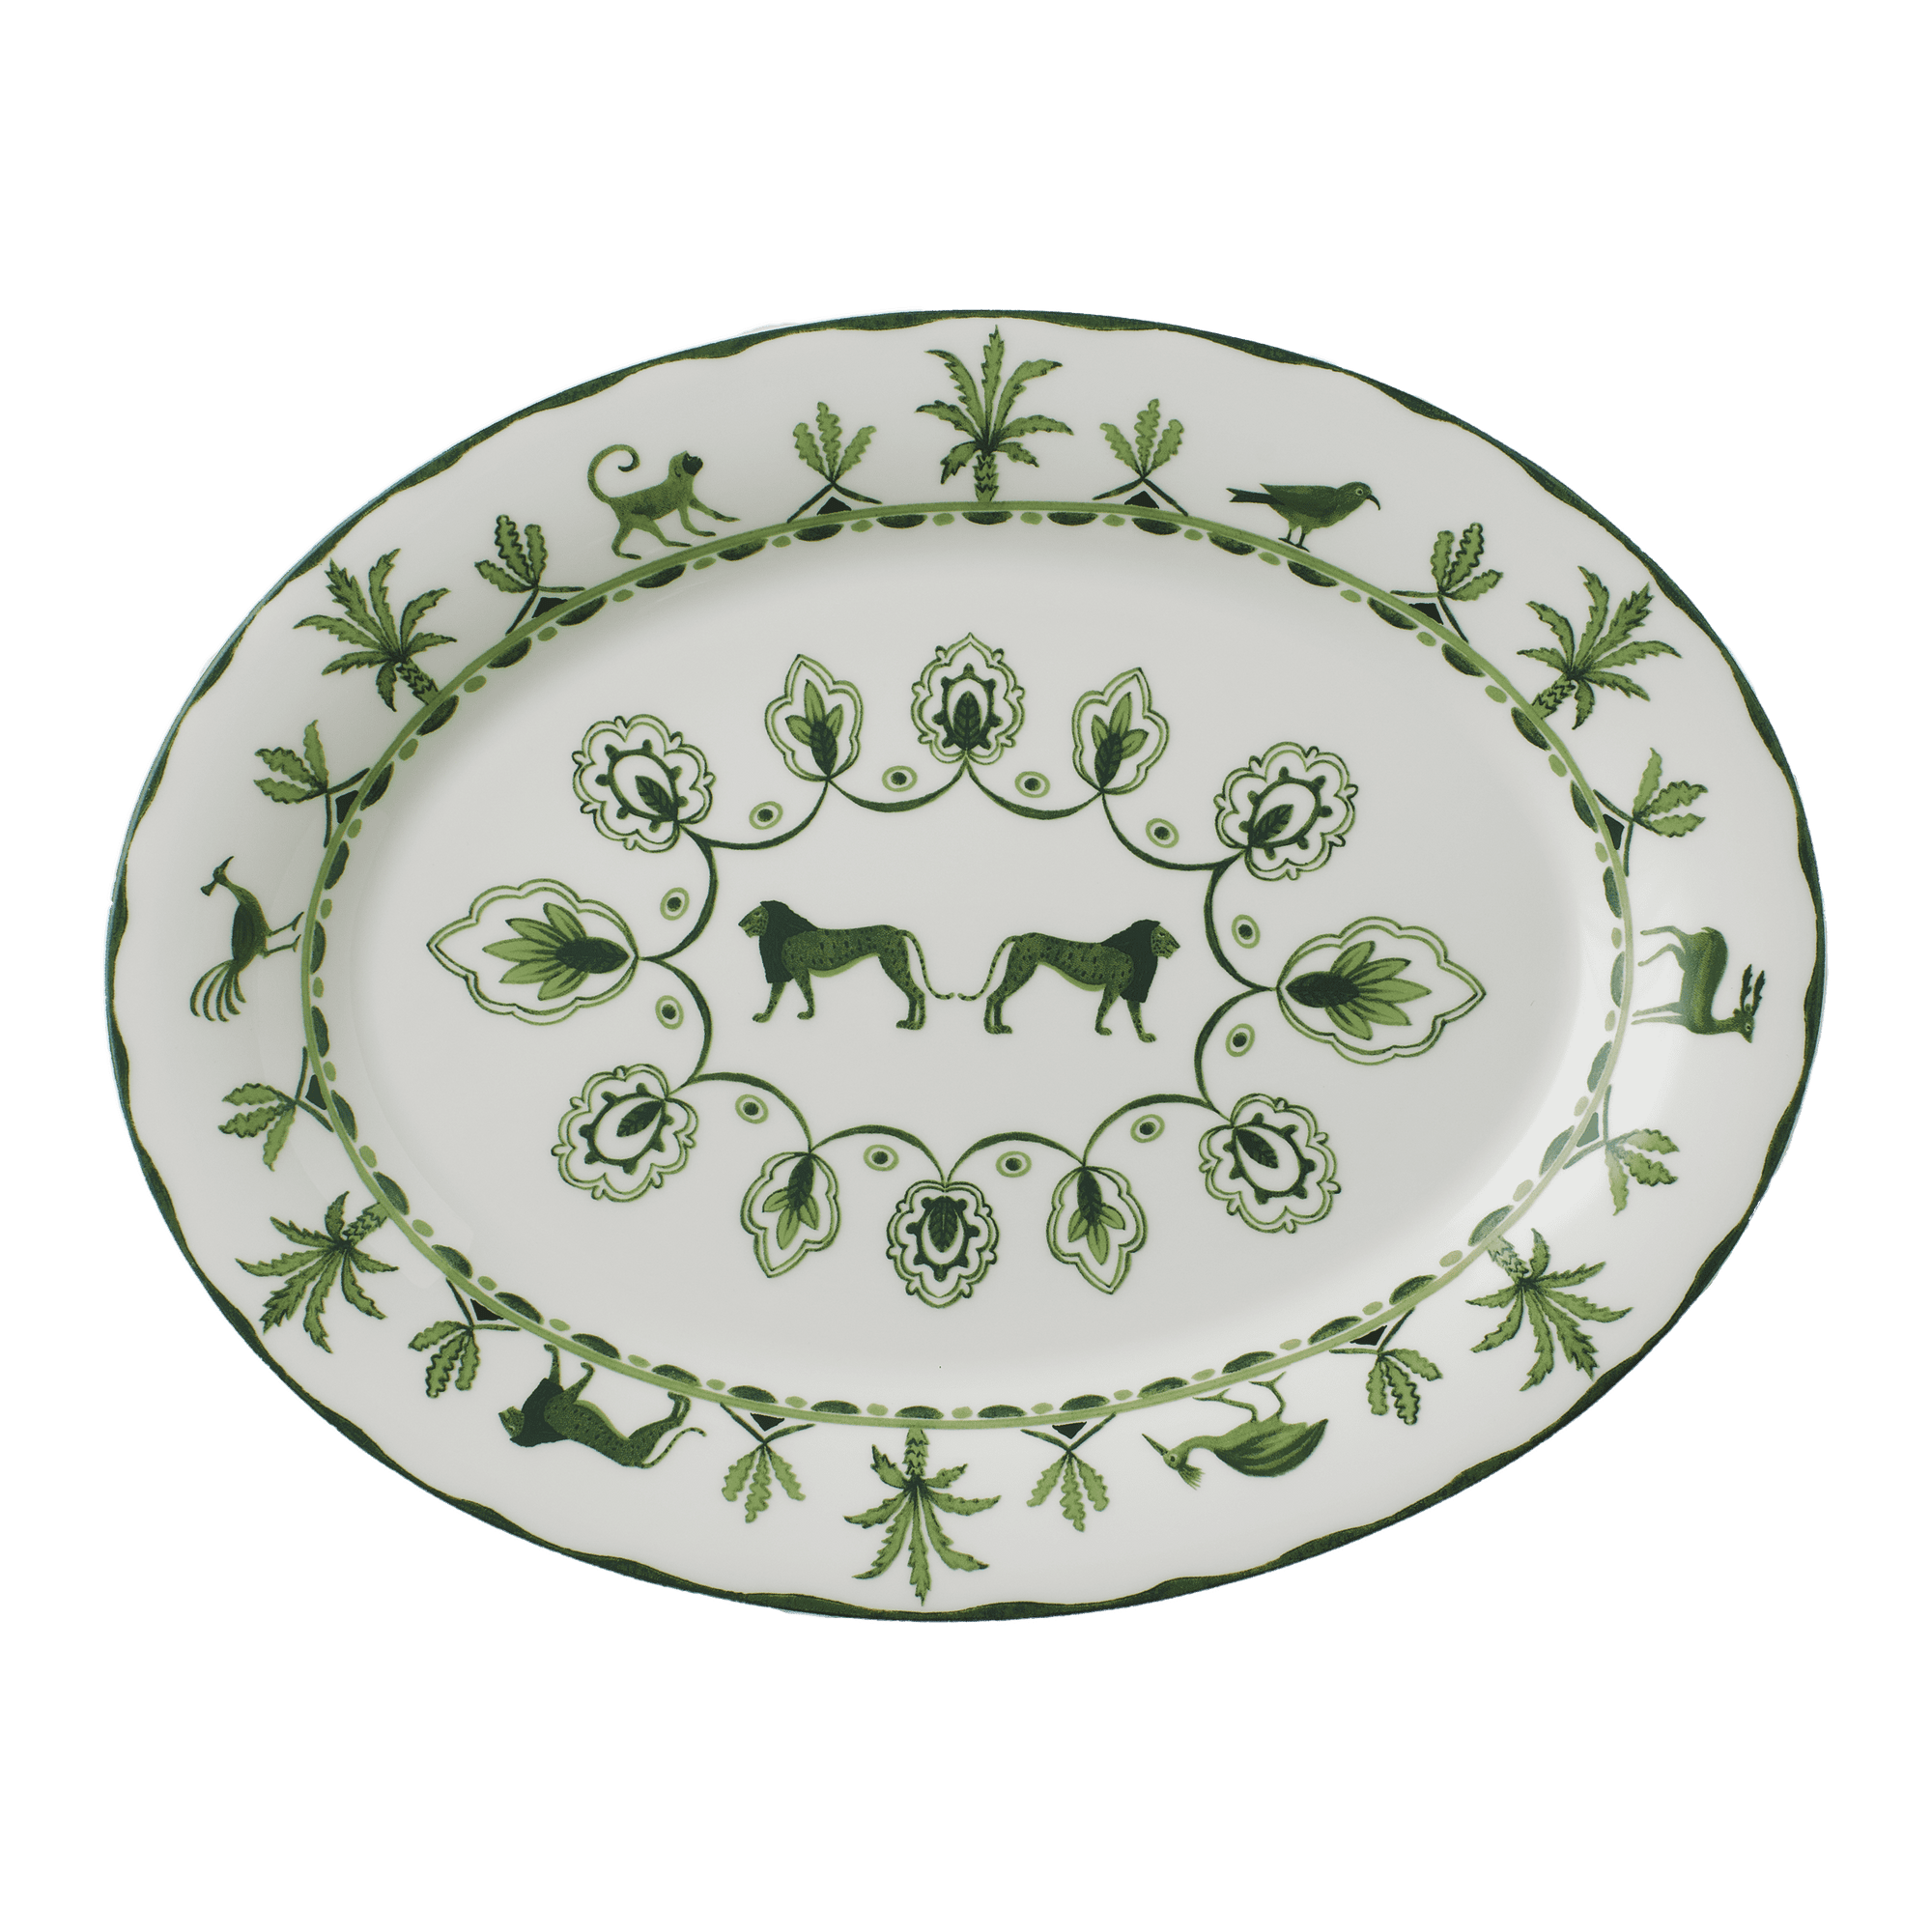 Sultan's Garden Oval Platter